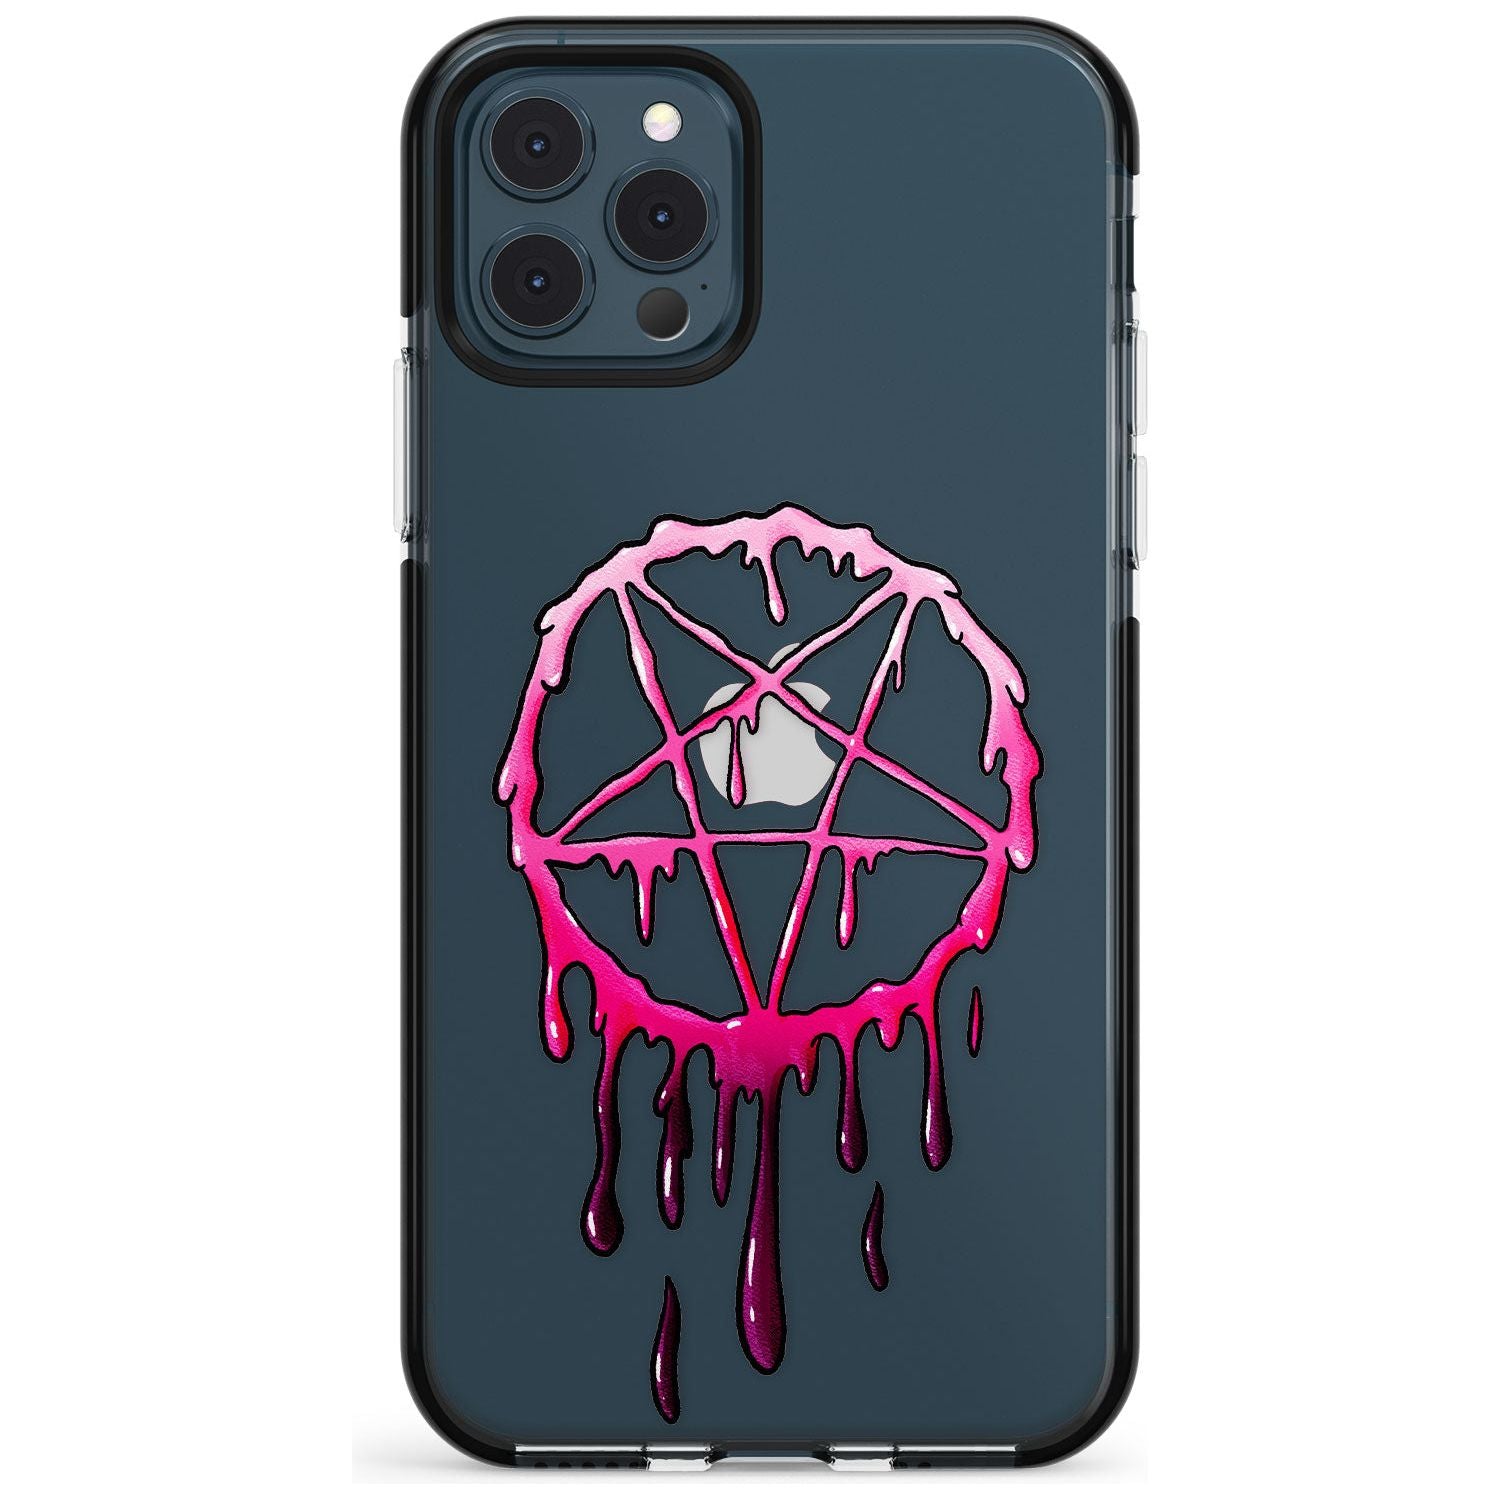 Pentagram of Blood Black Impact Phone Case for iPhone 11